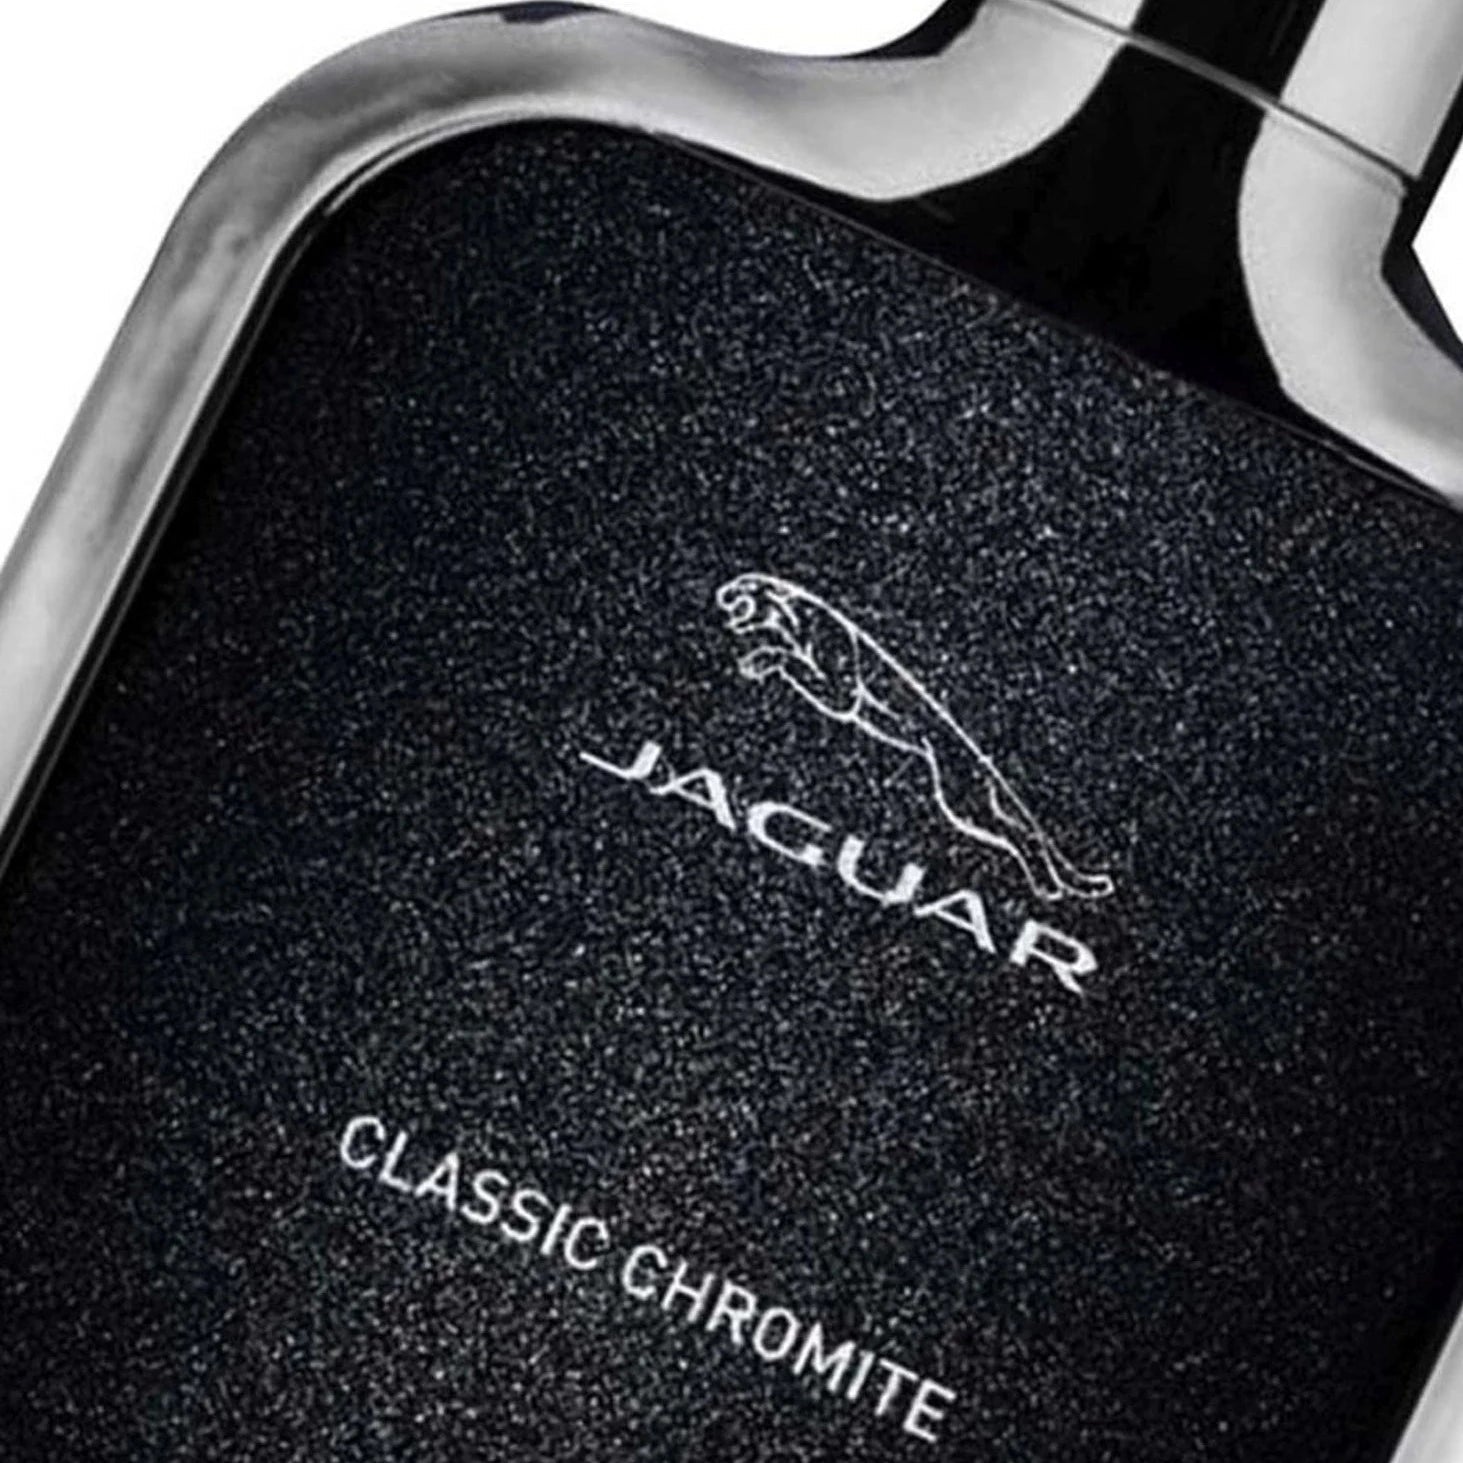 Jaguar Classic Chromite EDT | My Perfume Shop Australia